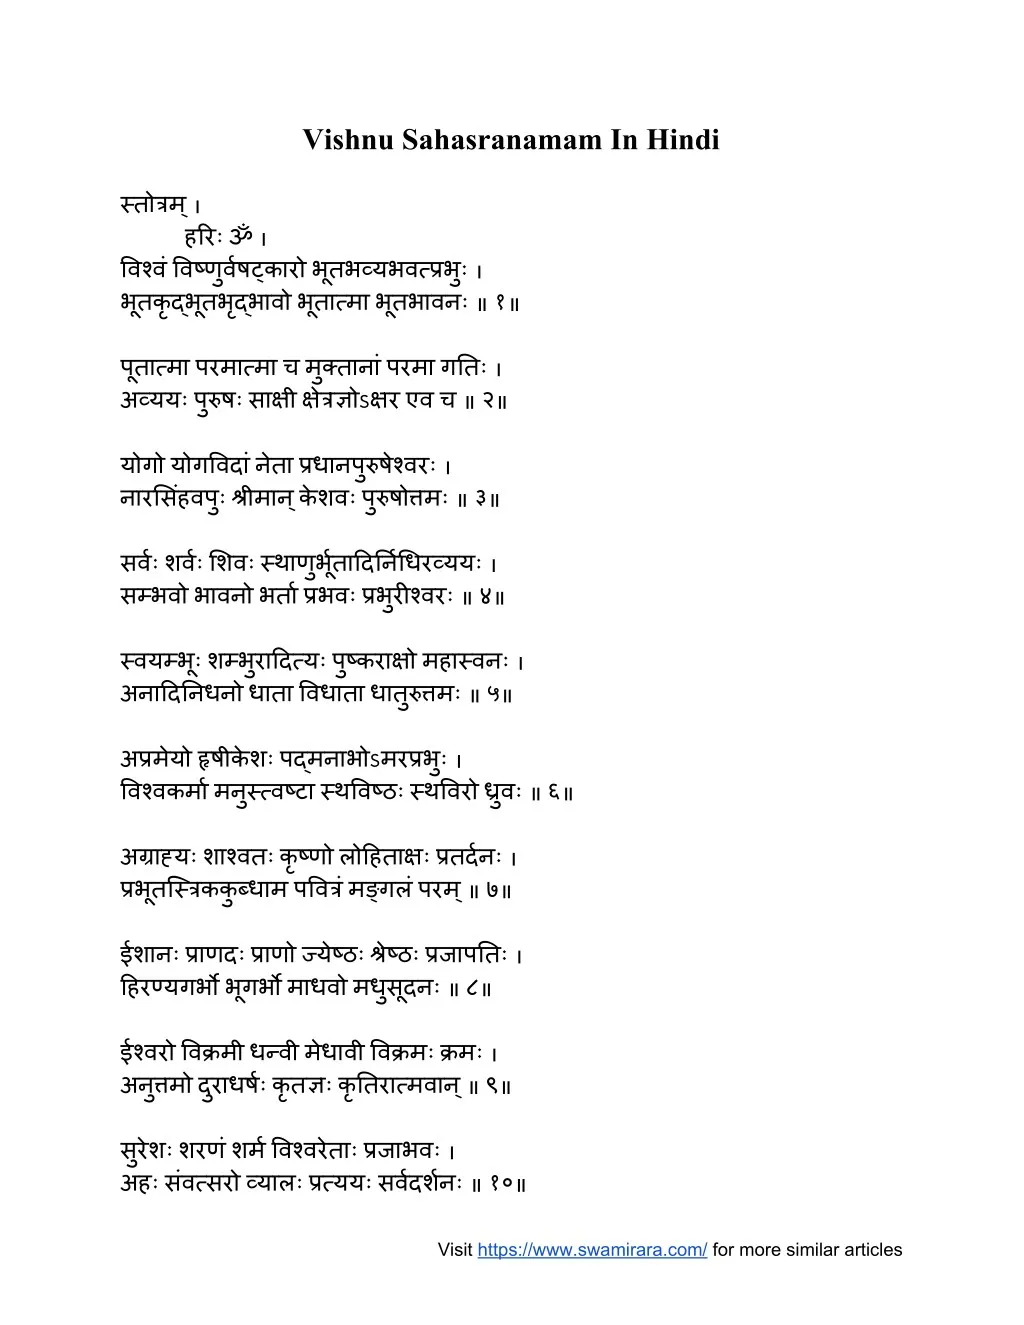 vishnu sahasranamam in hindi